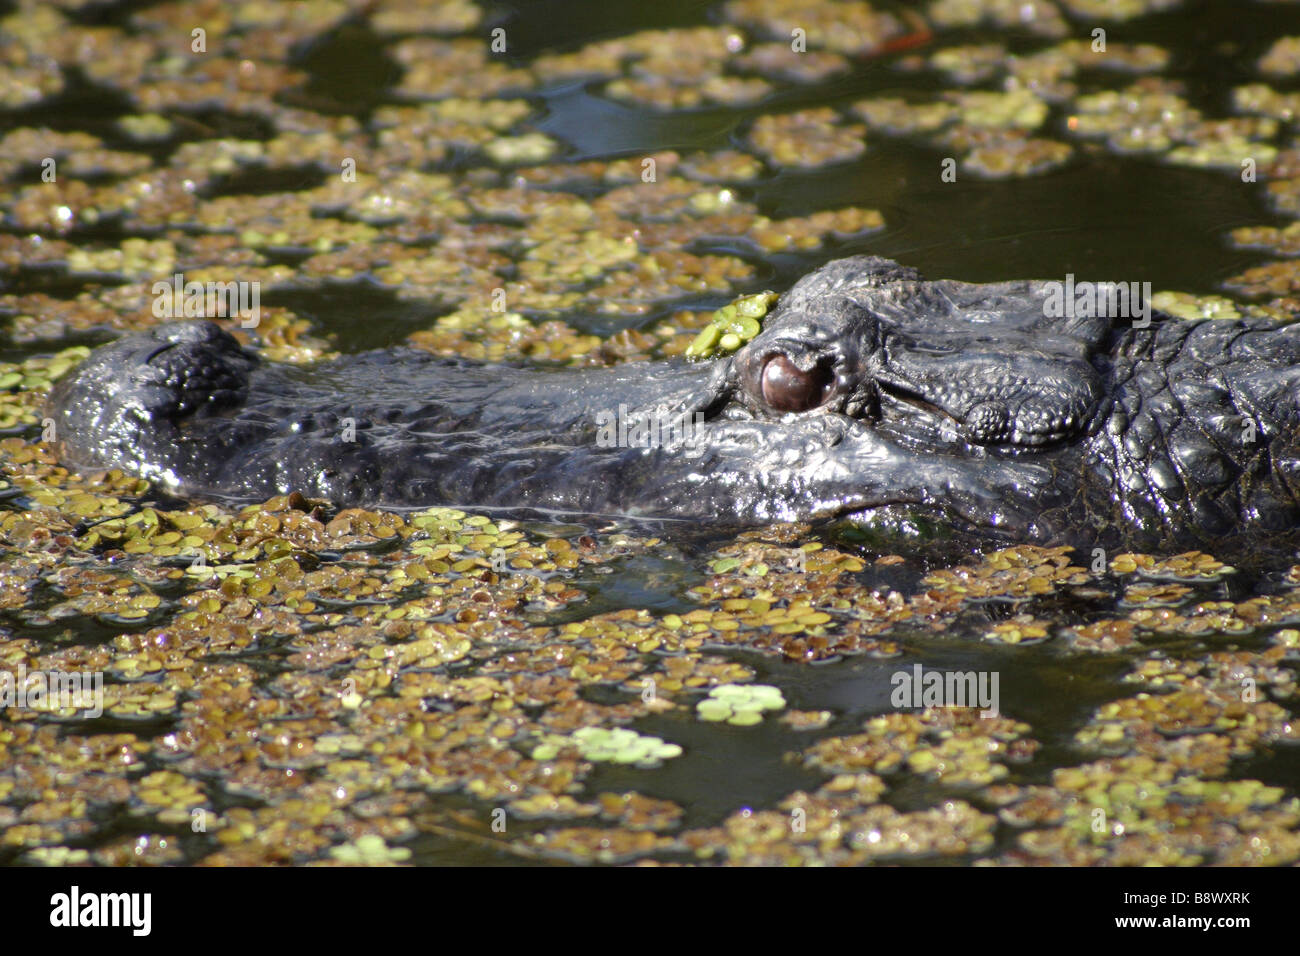 Alligator Stockfoto